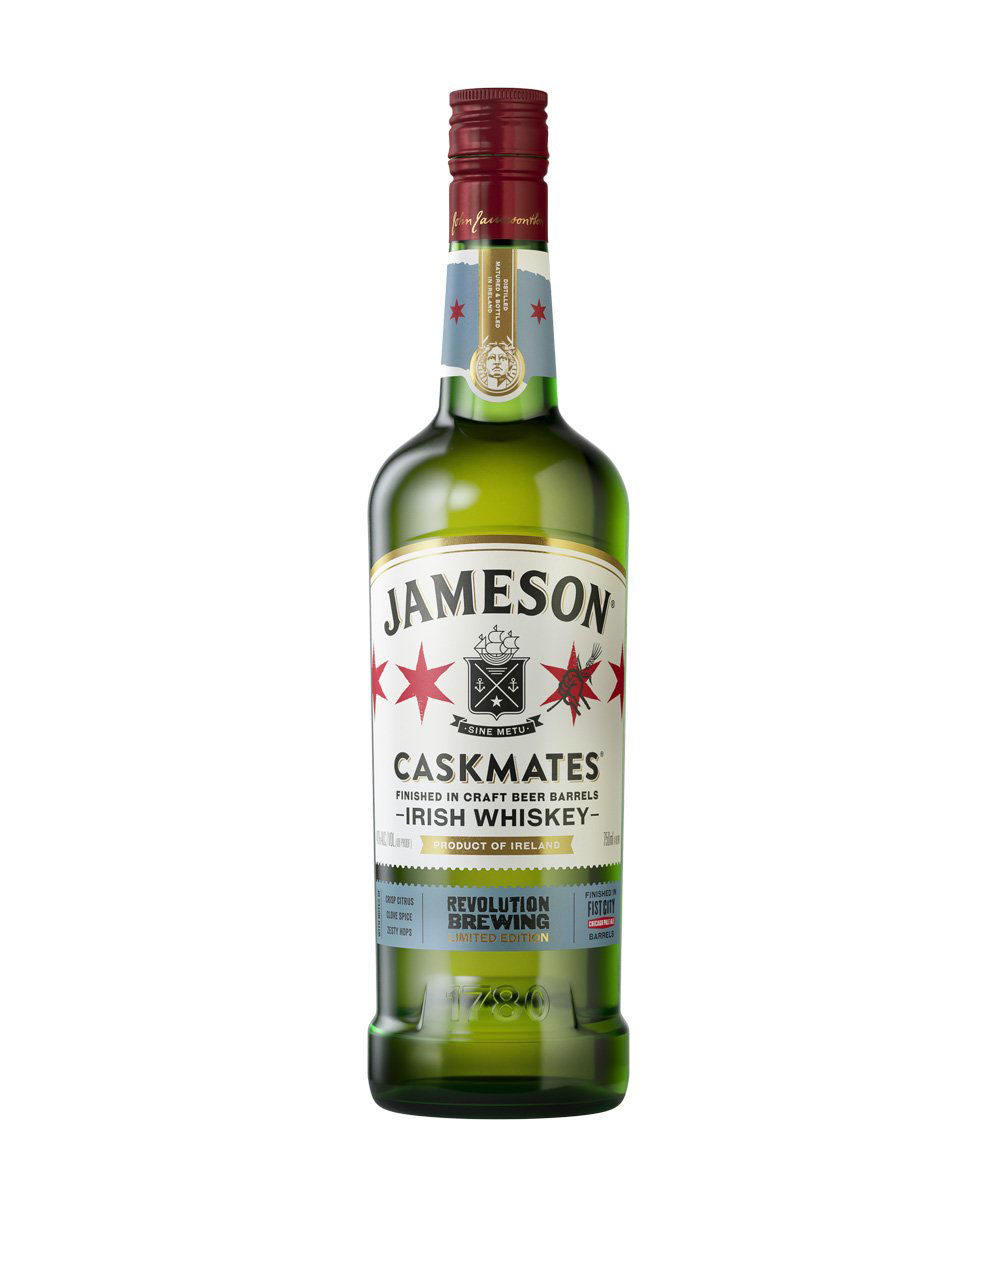 Jameson Caskmates Revolution Brewing Edition Irish Whiskey